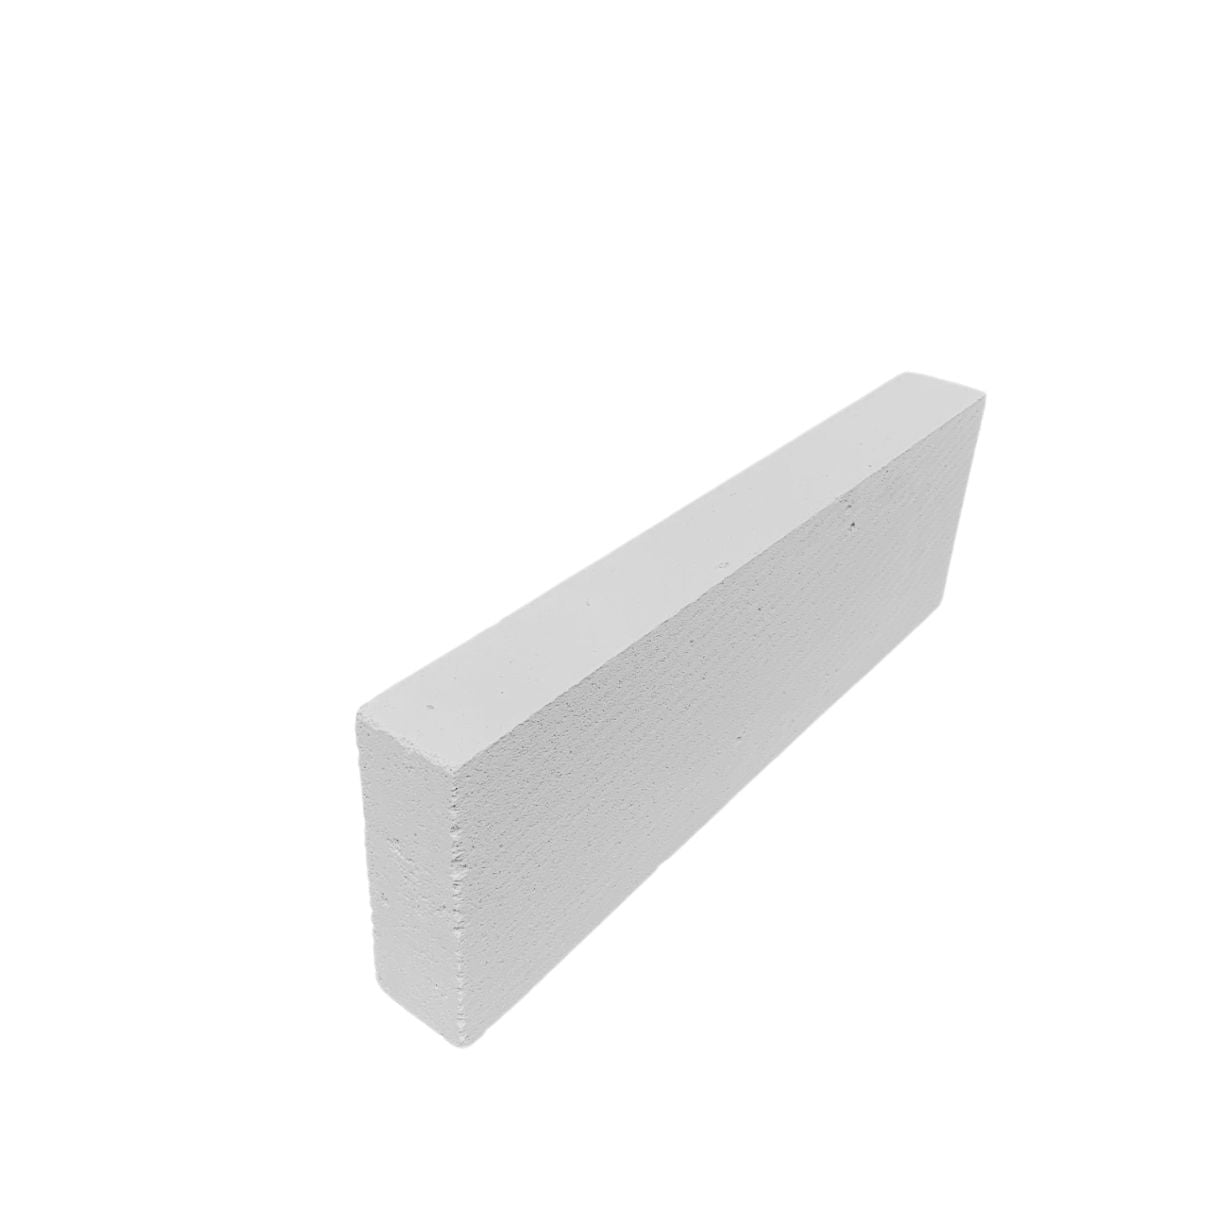 Aerated concrete Block G4/550 600x200x70mm